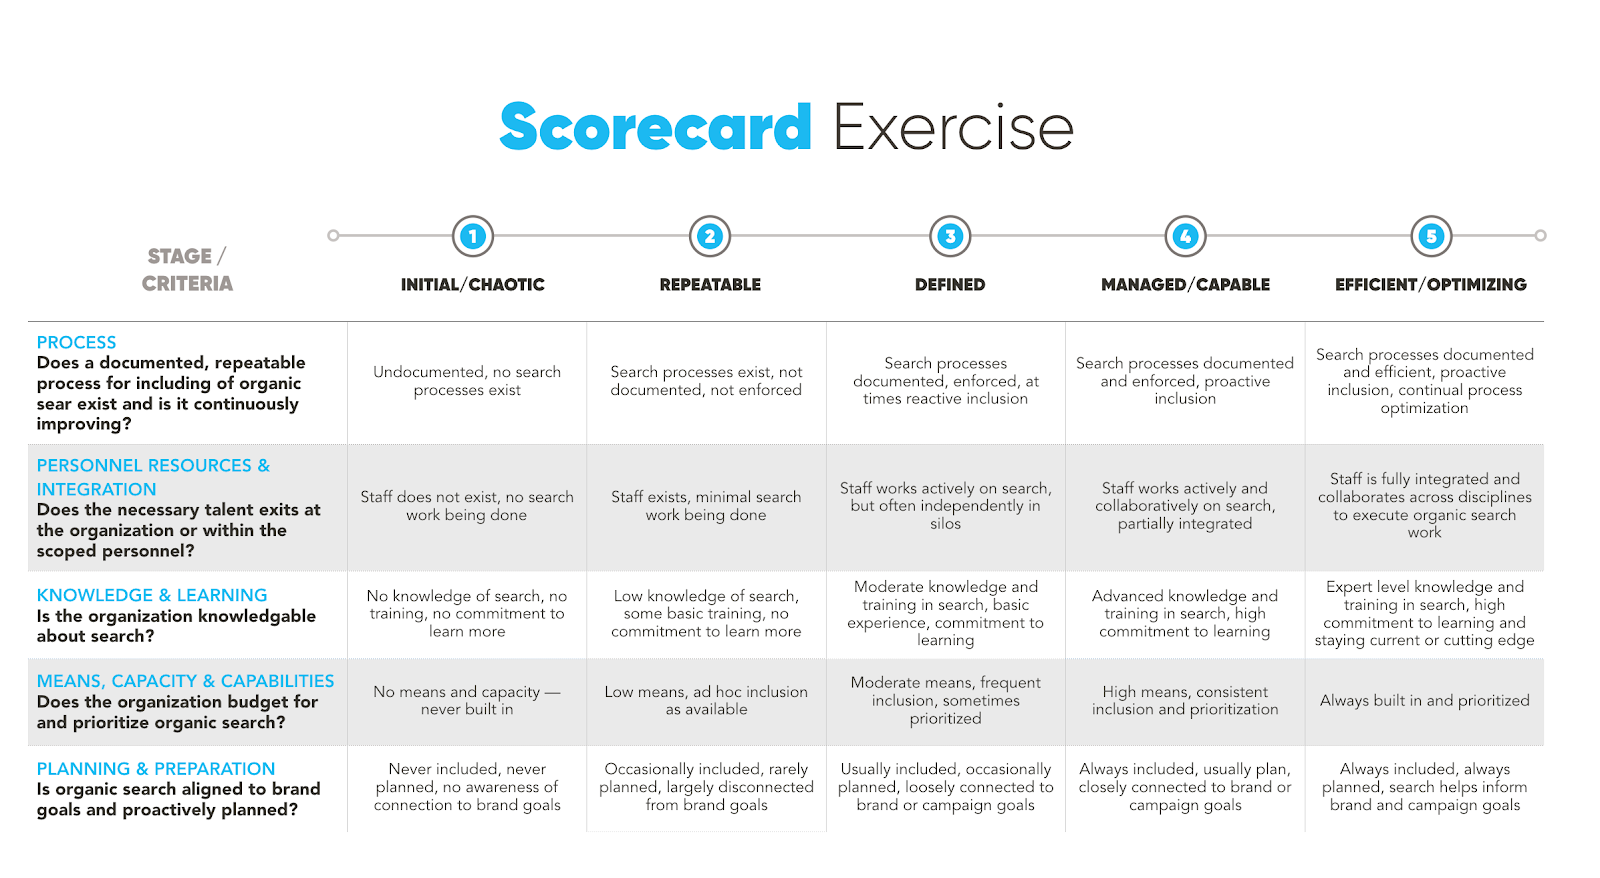 Scorecard exercise